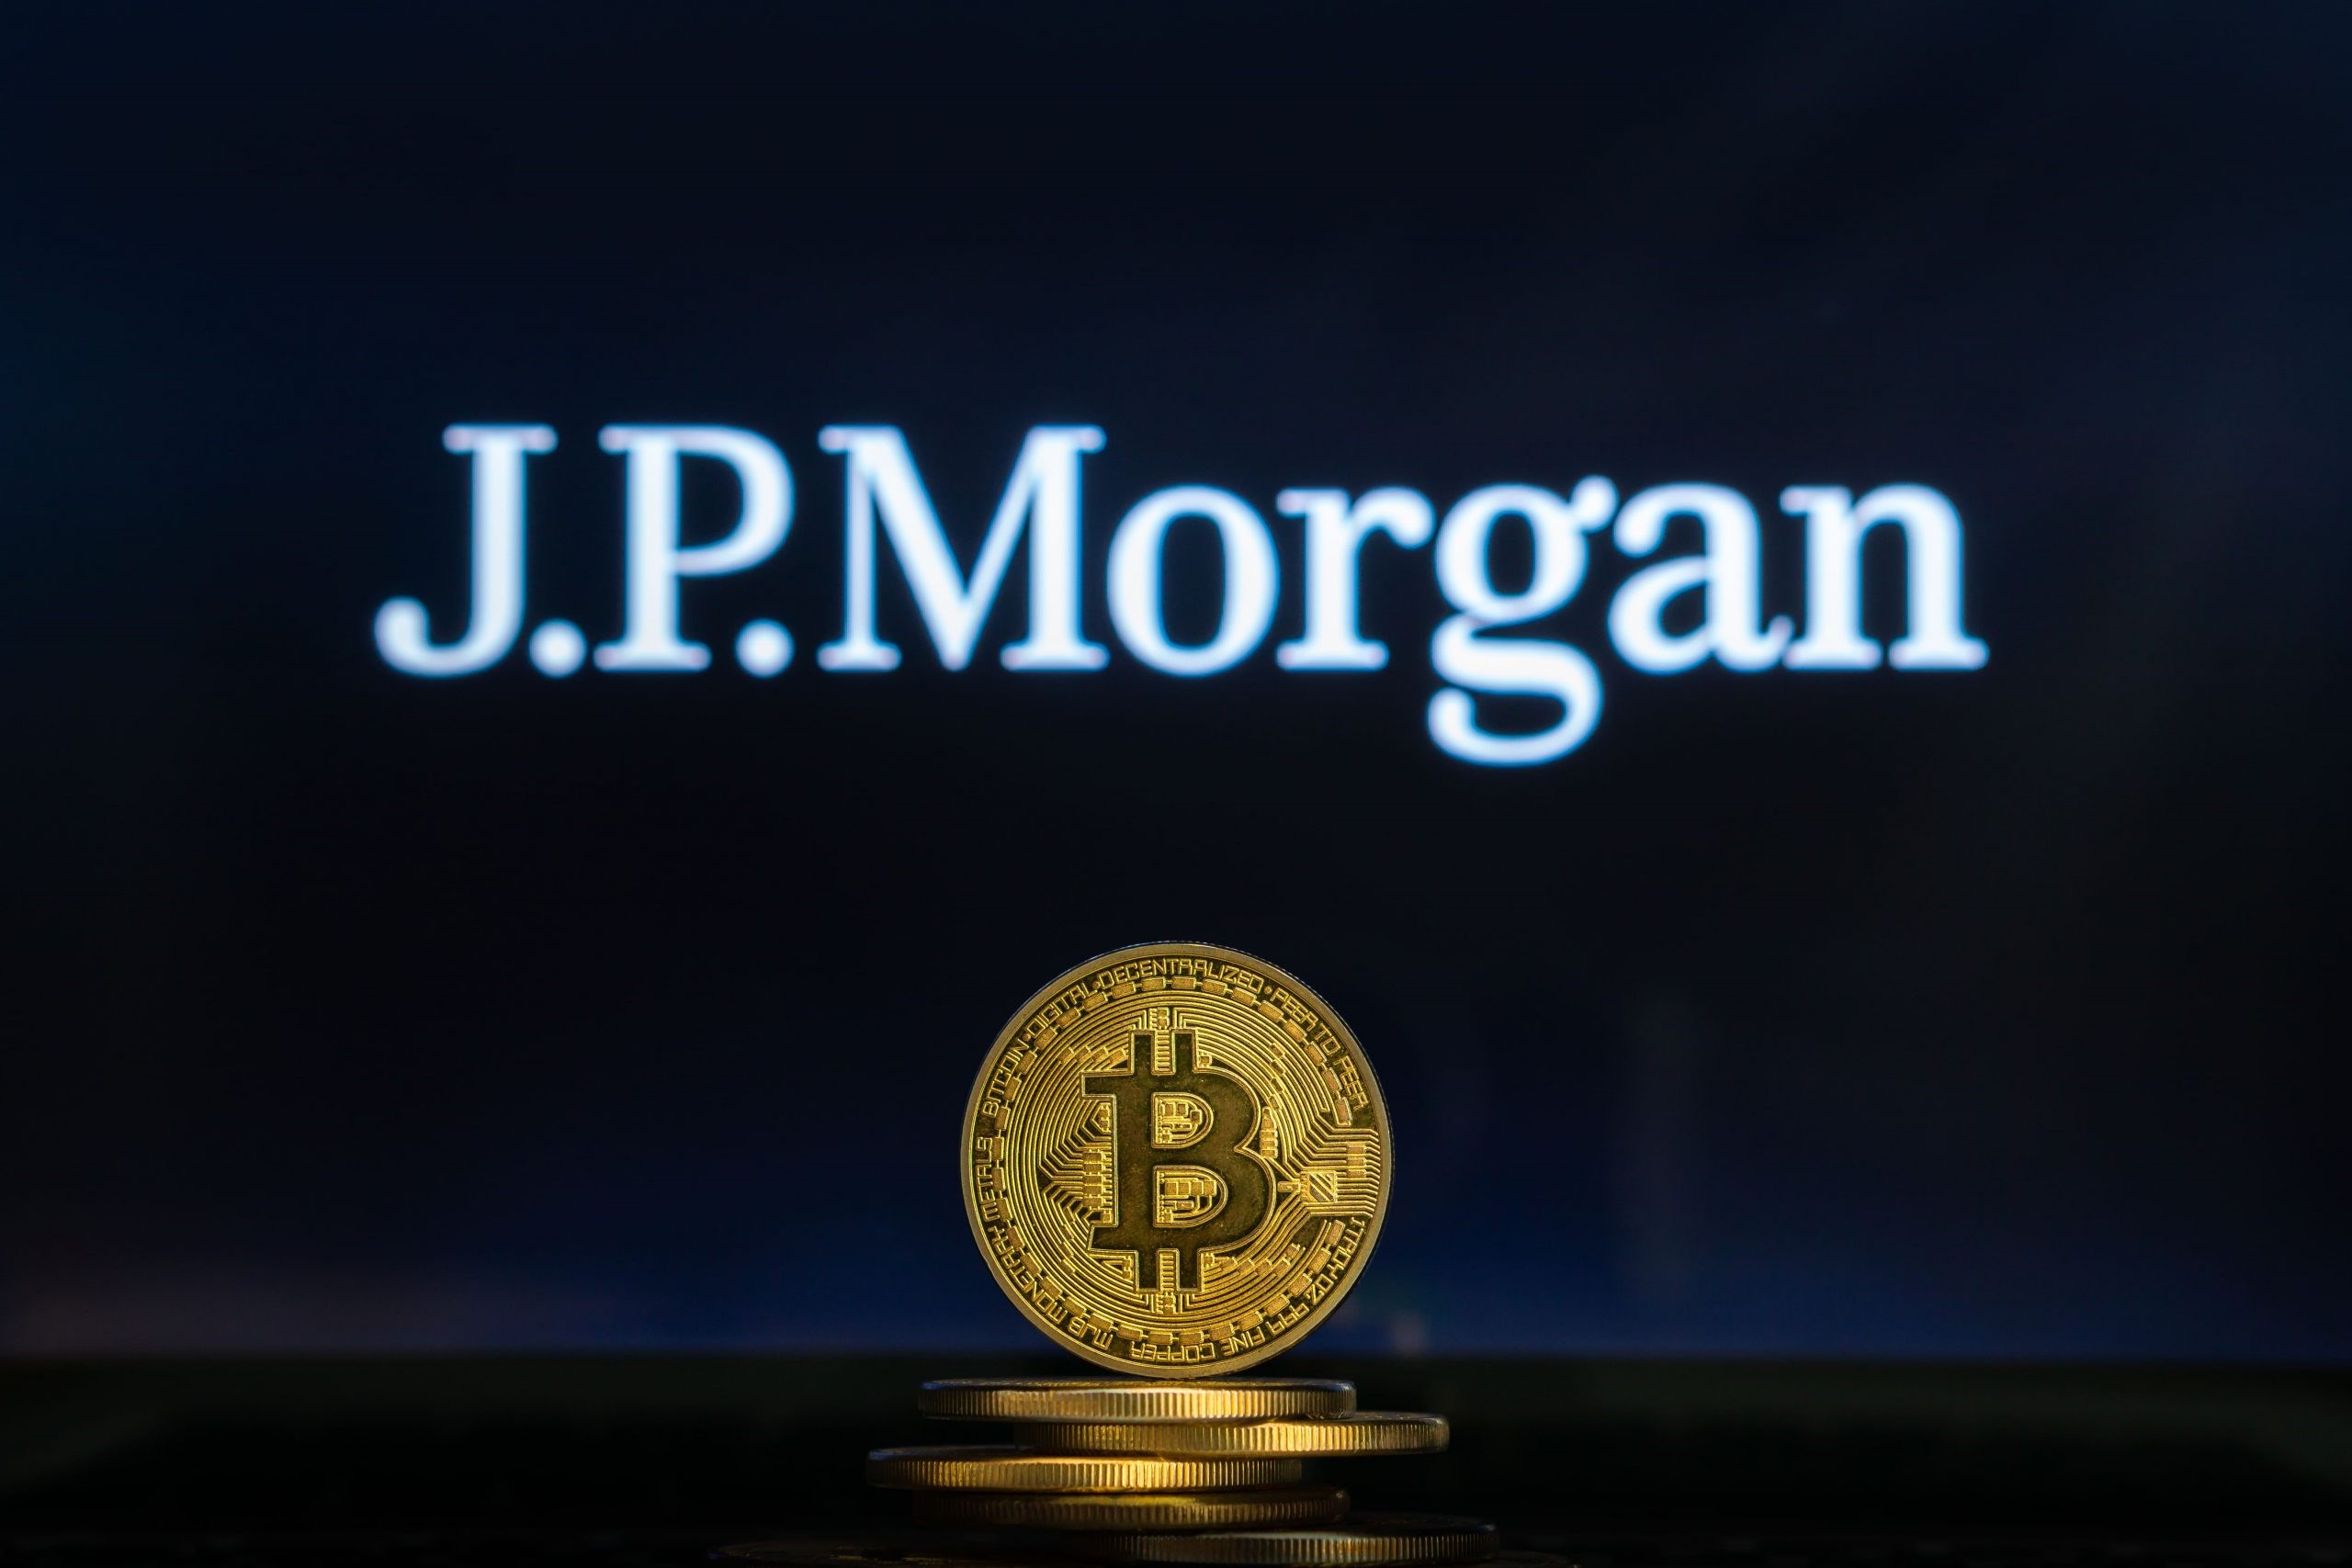 JP Morgan'dan Bitcoin tahmini: 13 bin dolara düşebilir